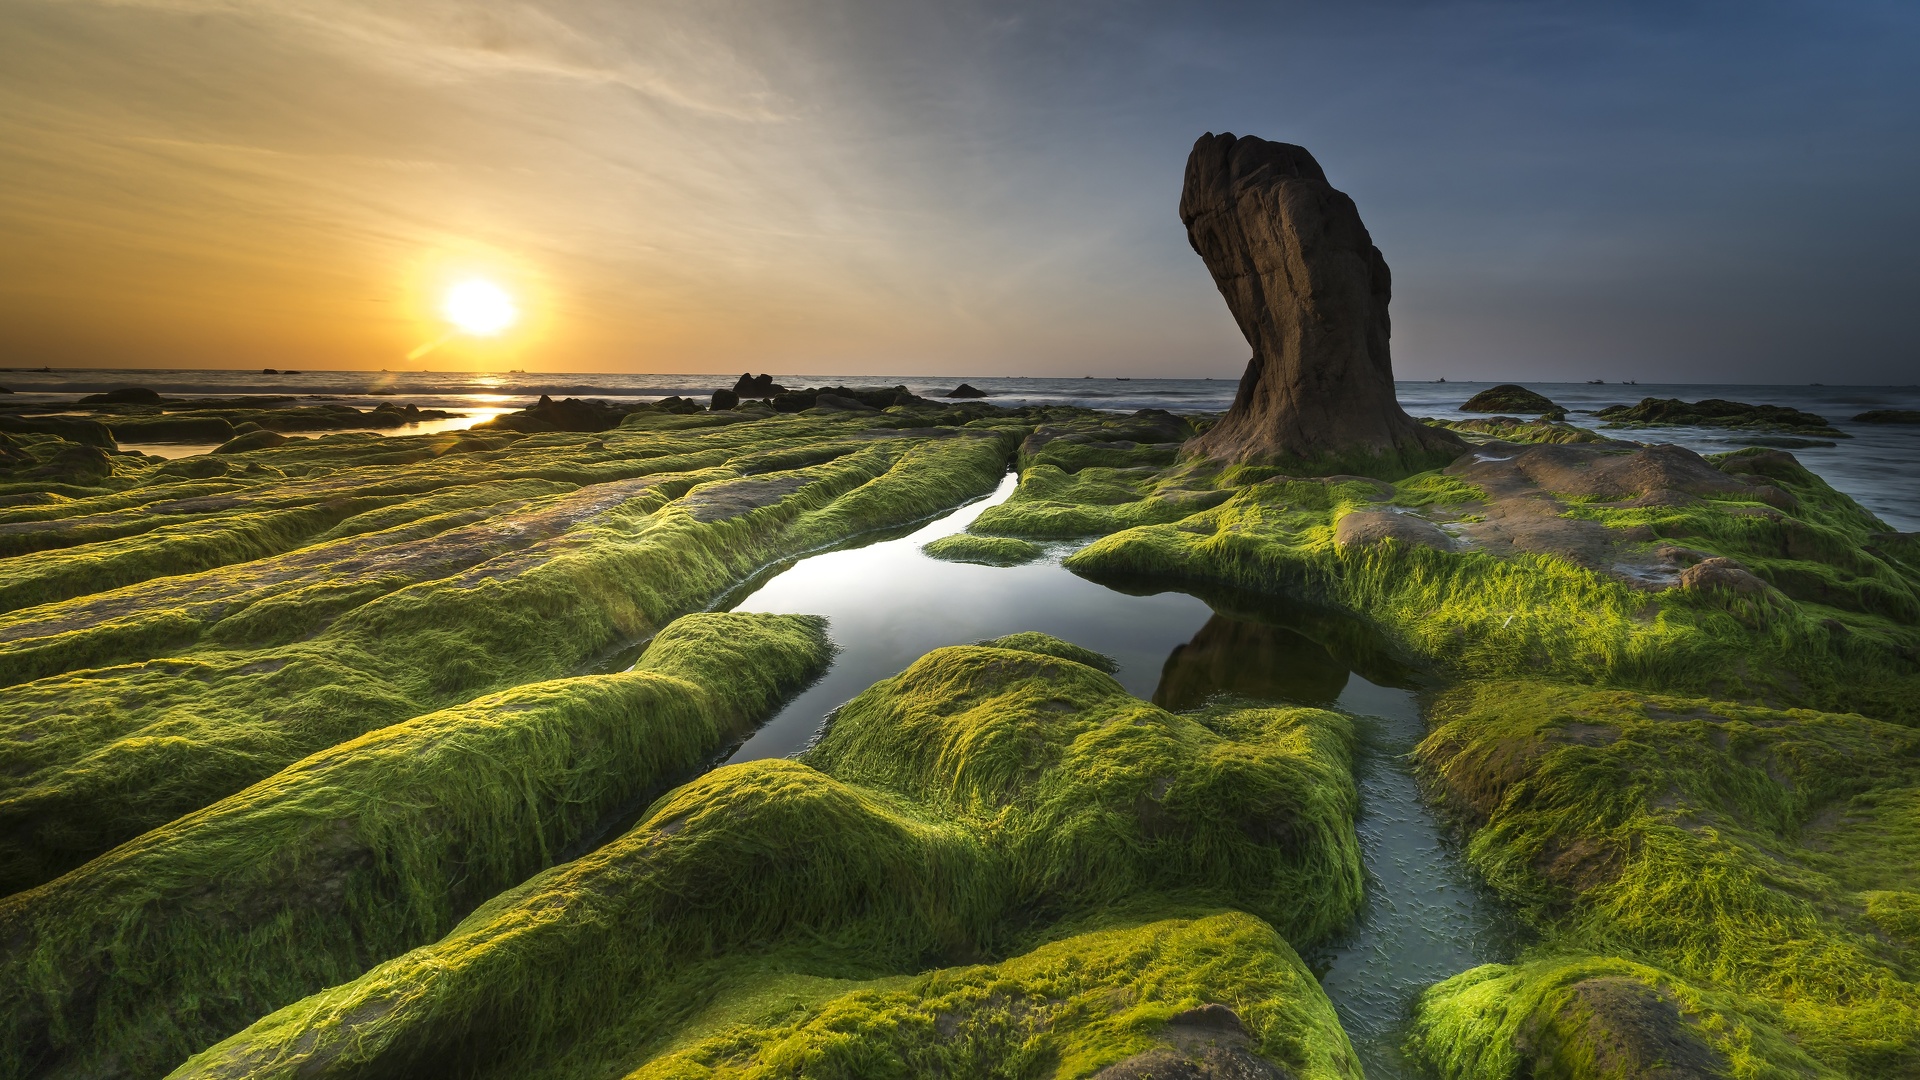 Bord de mer - algues et rochers.jpg